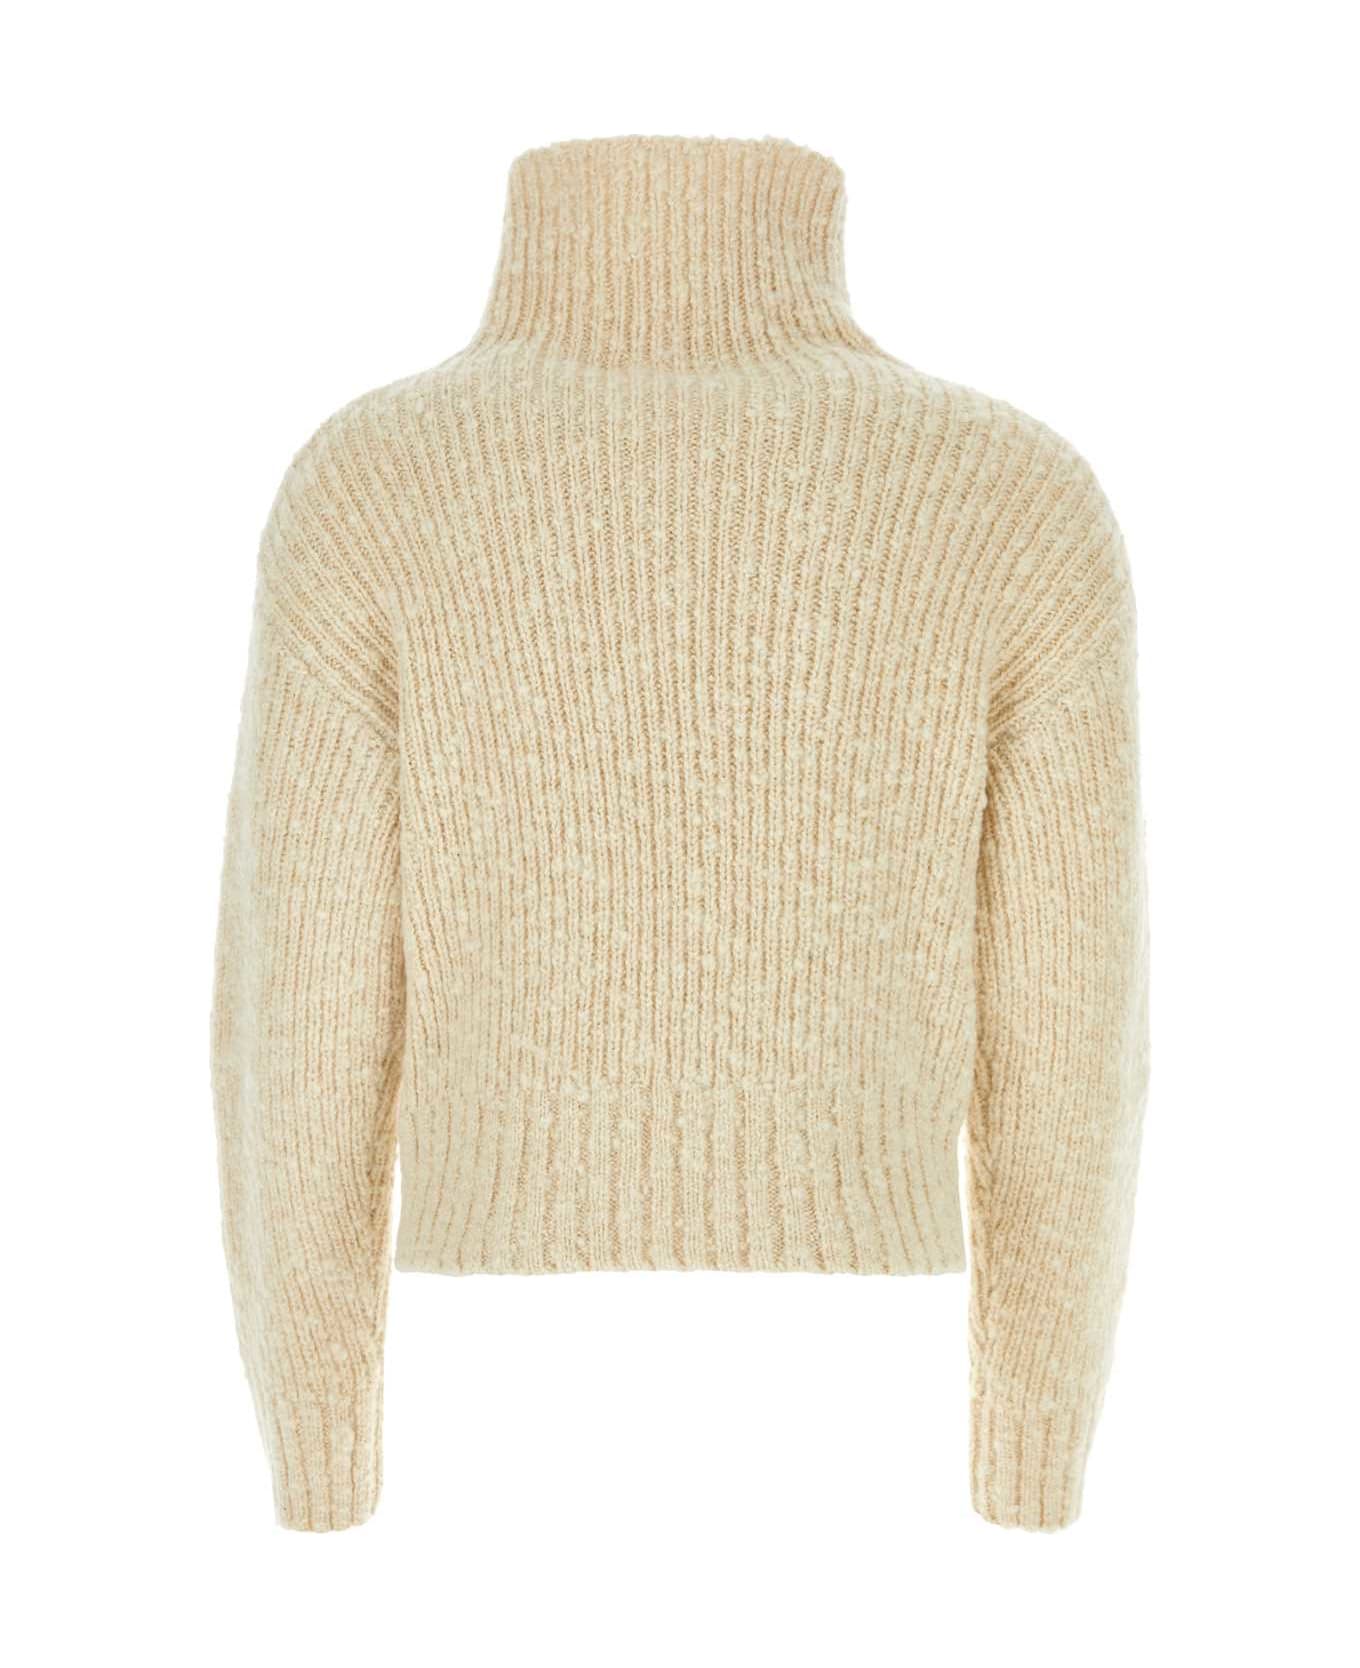 Ami Alexandre Mattiussi Ivory Wool Blend Sweater - IVORY